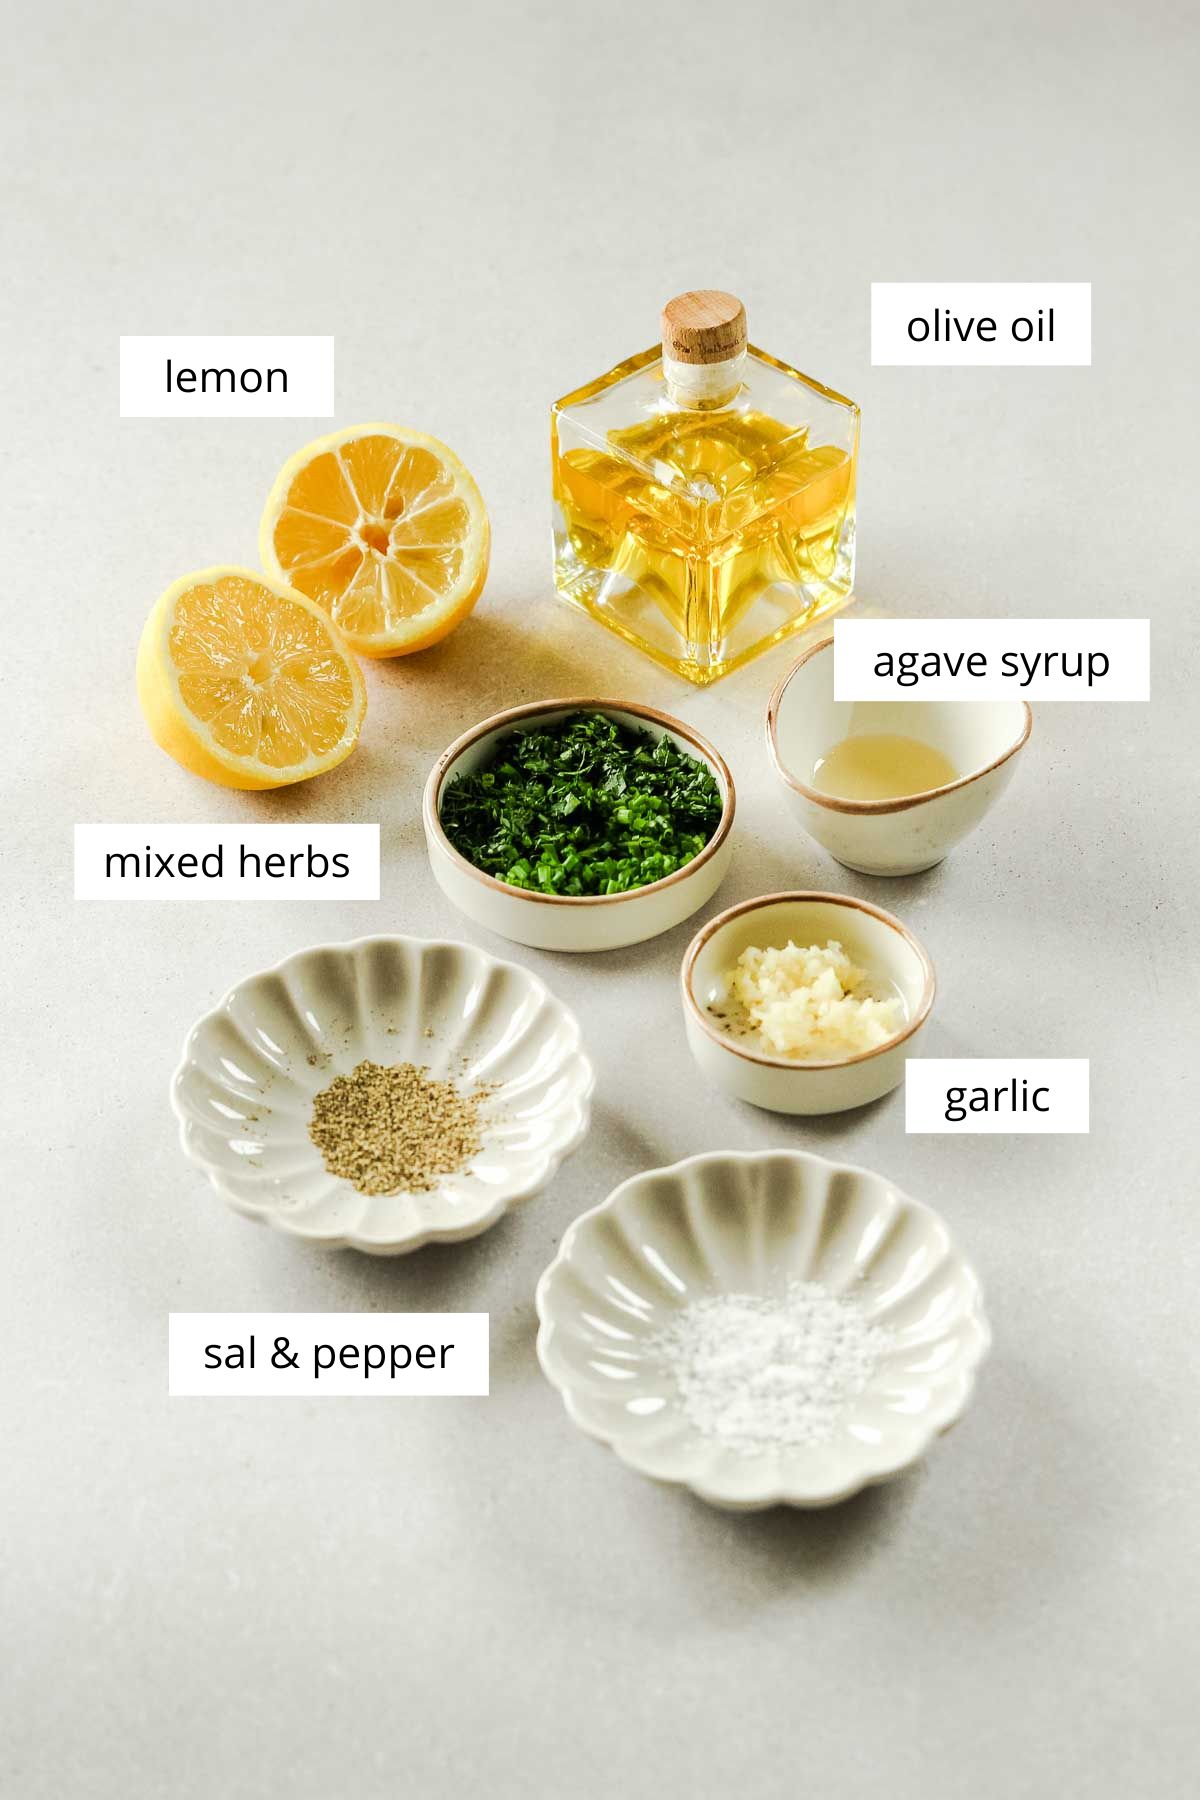 ingredients for simple lemon herb vinaigrette dressing on beige background.